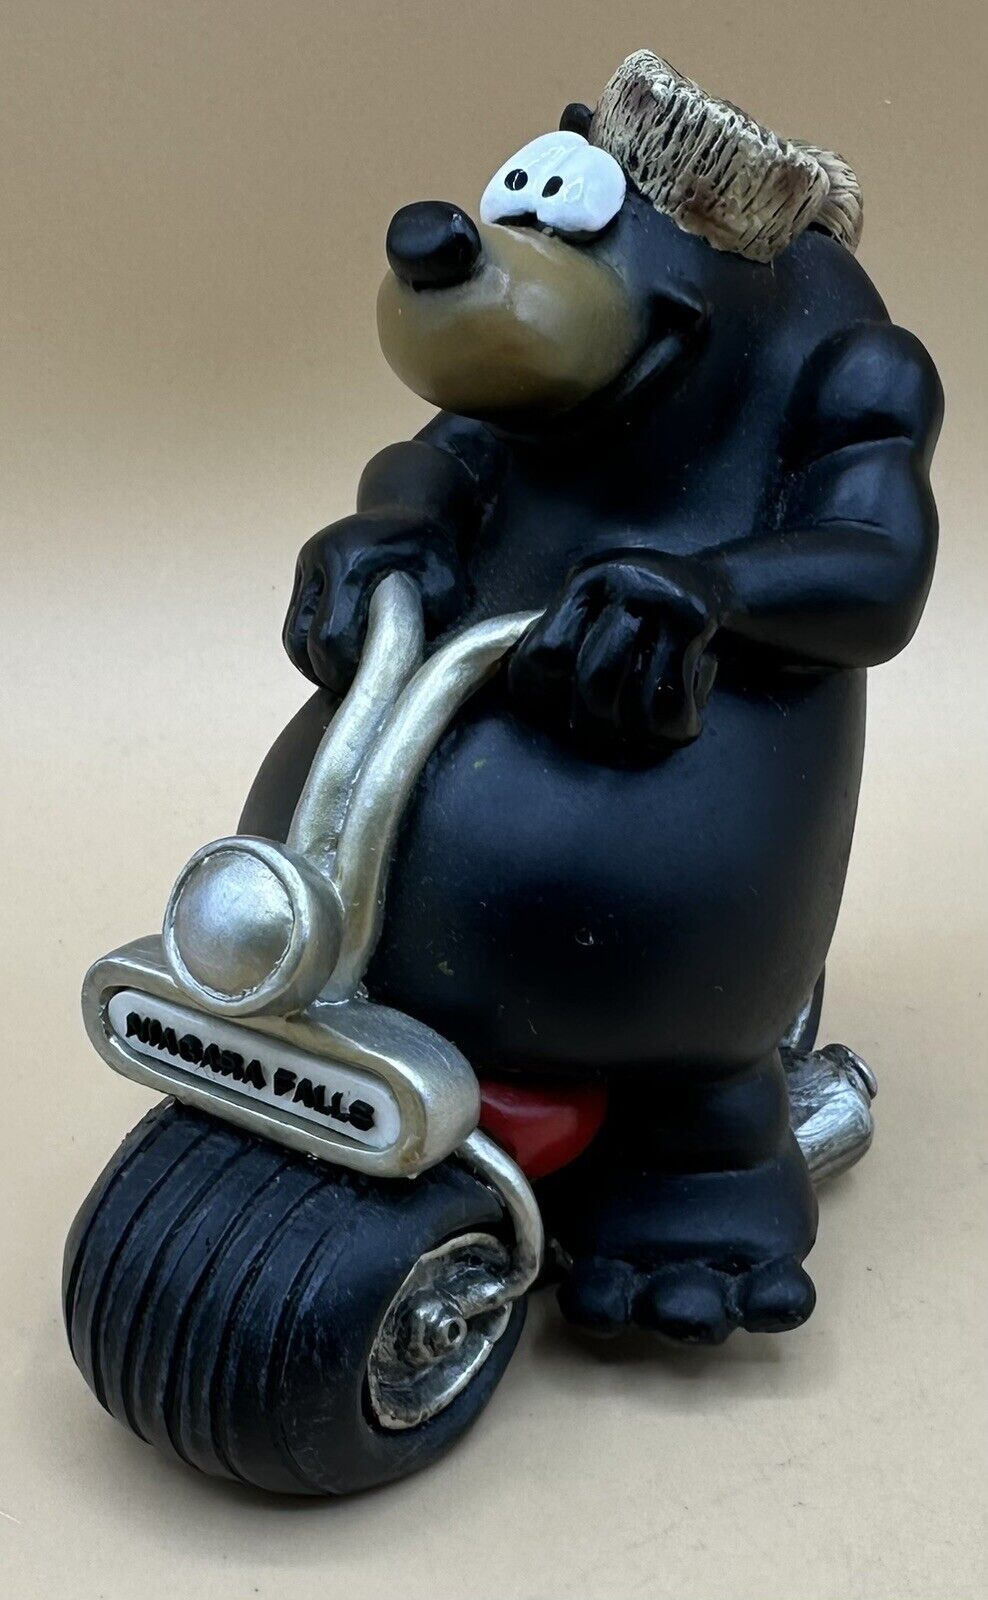 2008 Niagara Falls Black Bear Riding A Motorcycle Figurine